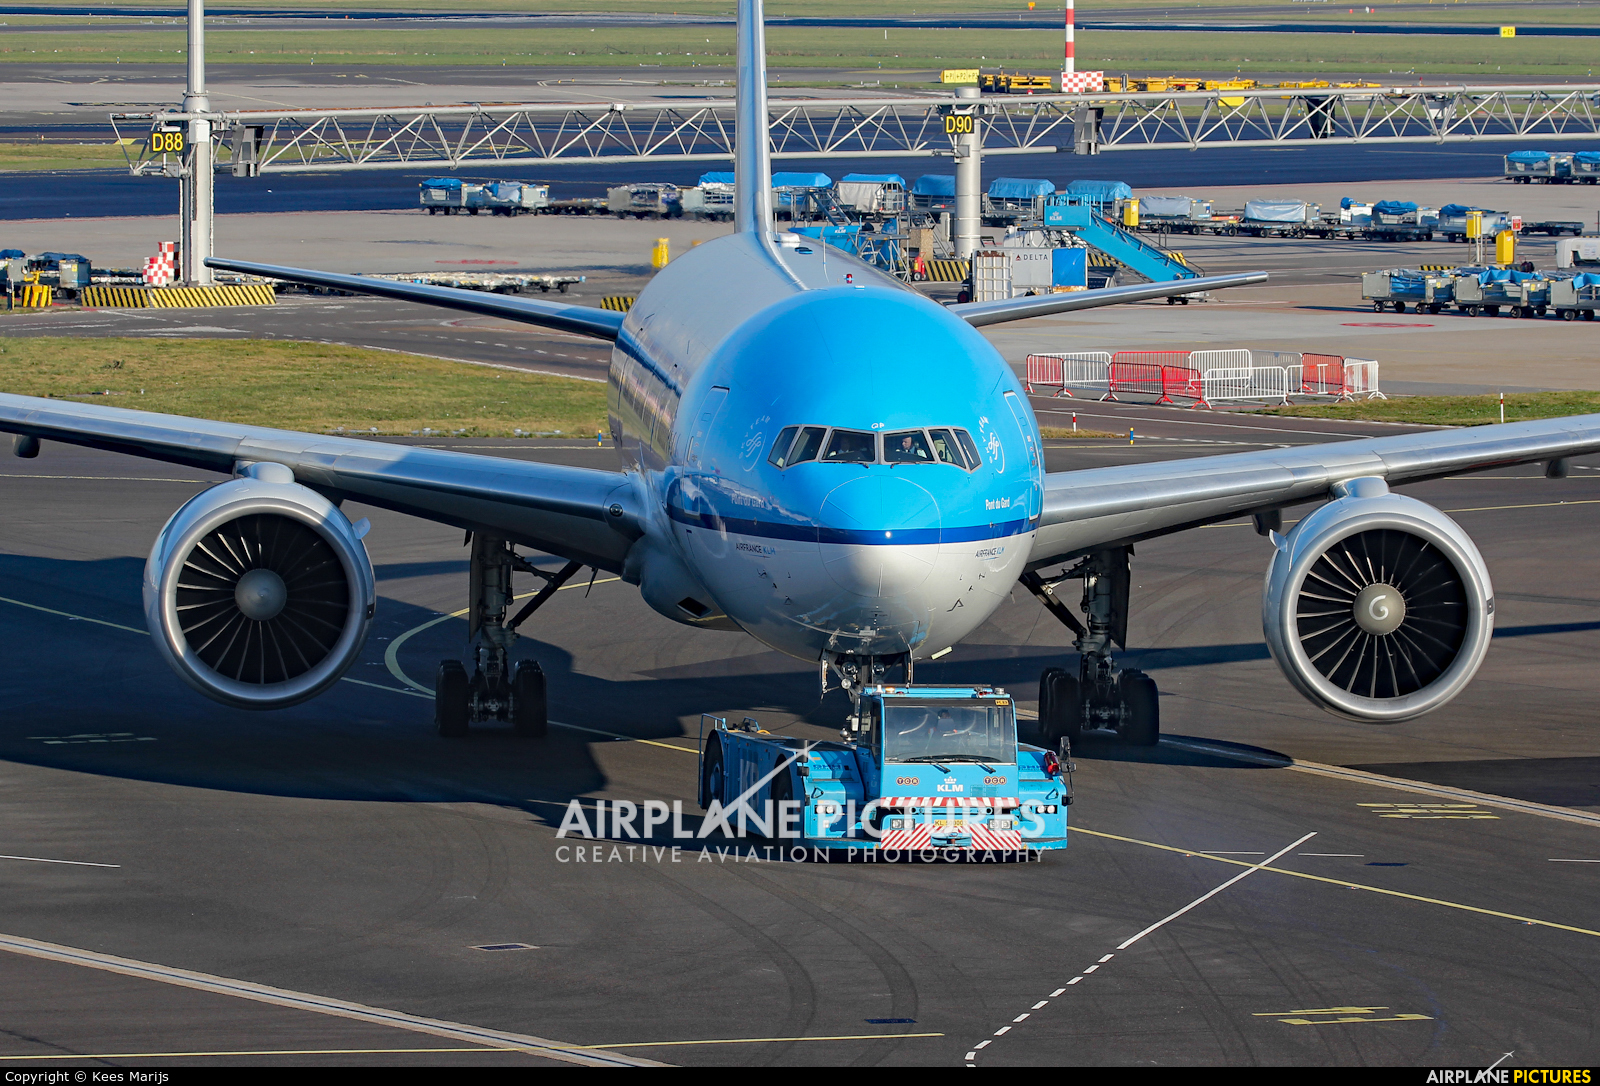 KLM PH-BQP aircraft at Amsterdam - Schiphol